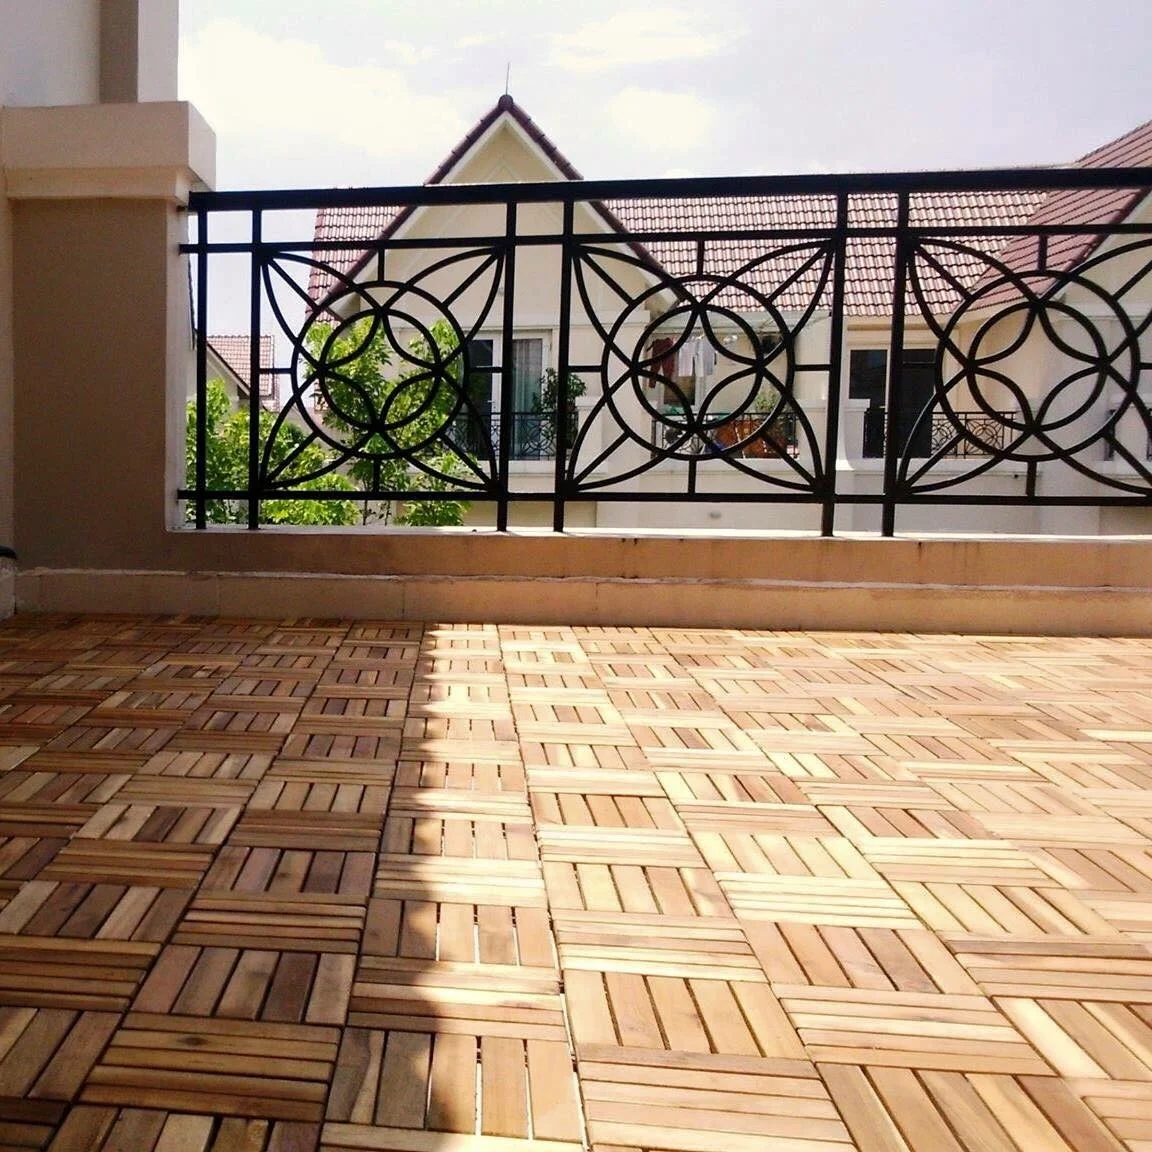 
Acacia Wood Interlocking Deck Tiles, Plastic wood composite interlock deck tile or Plastic Decking Flooring Tiles B6062 